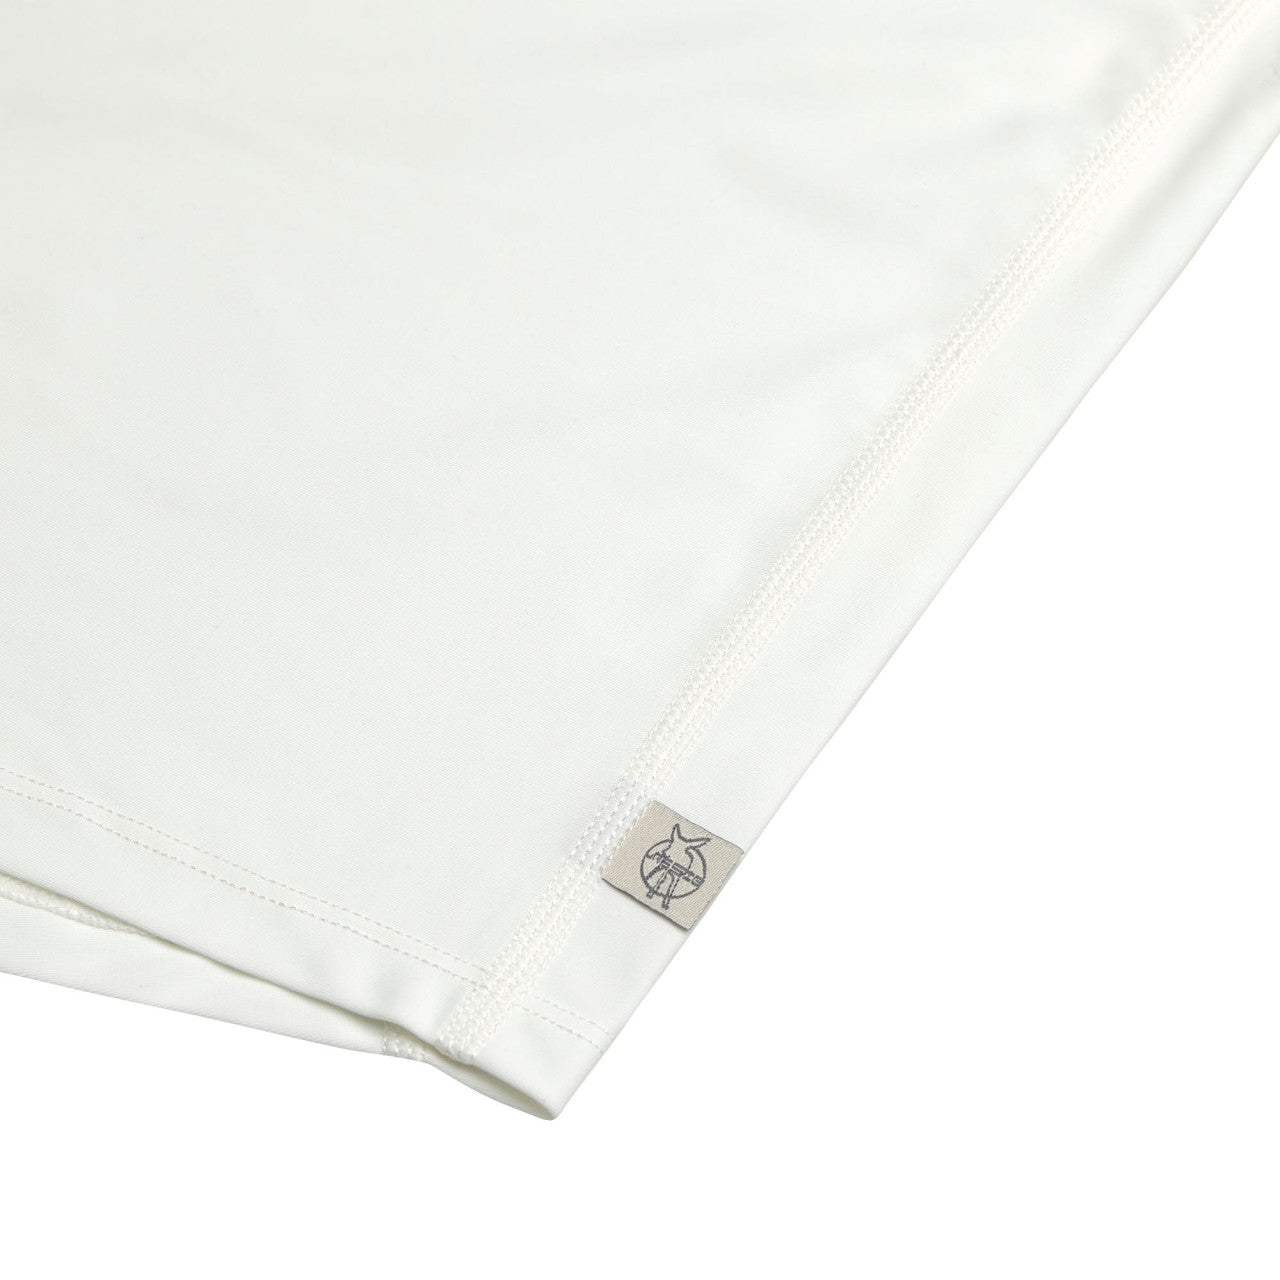 T-shirt anti-UV manches courtes Lion blanc - Lassig